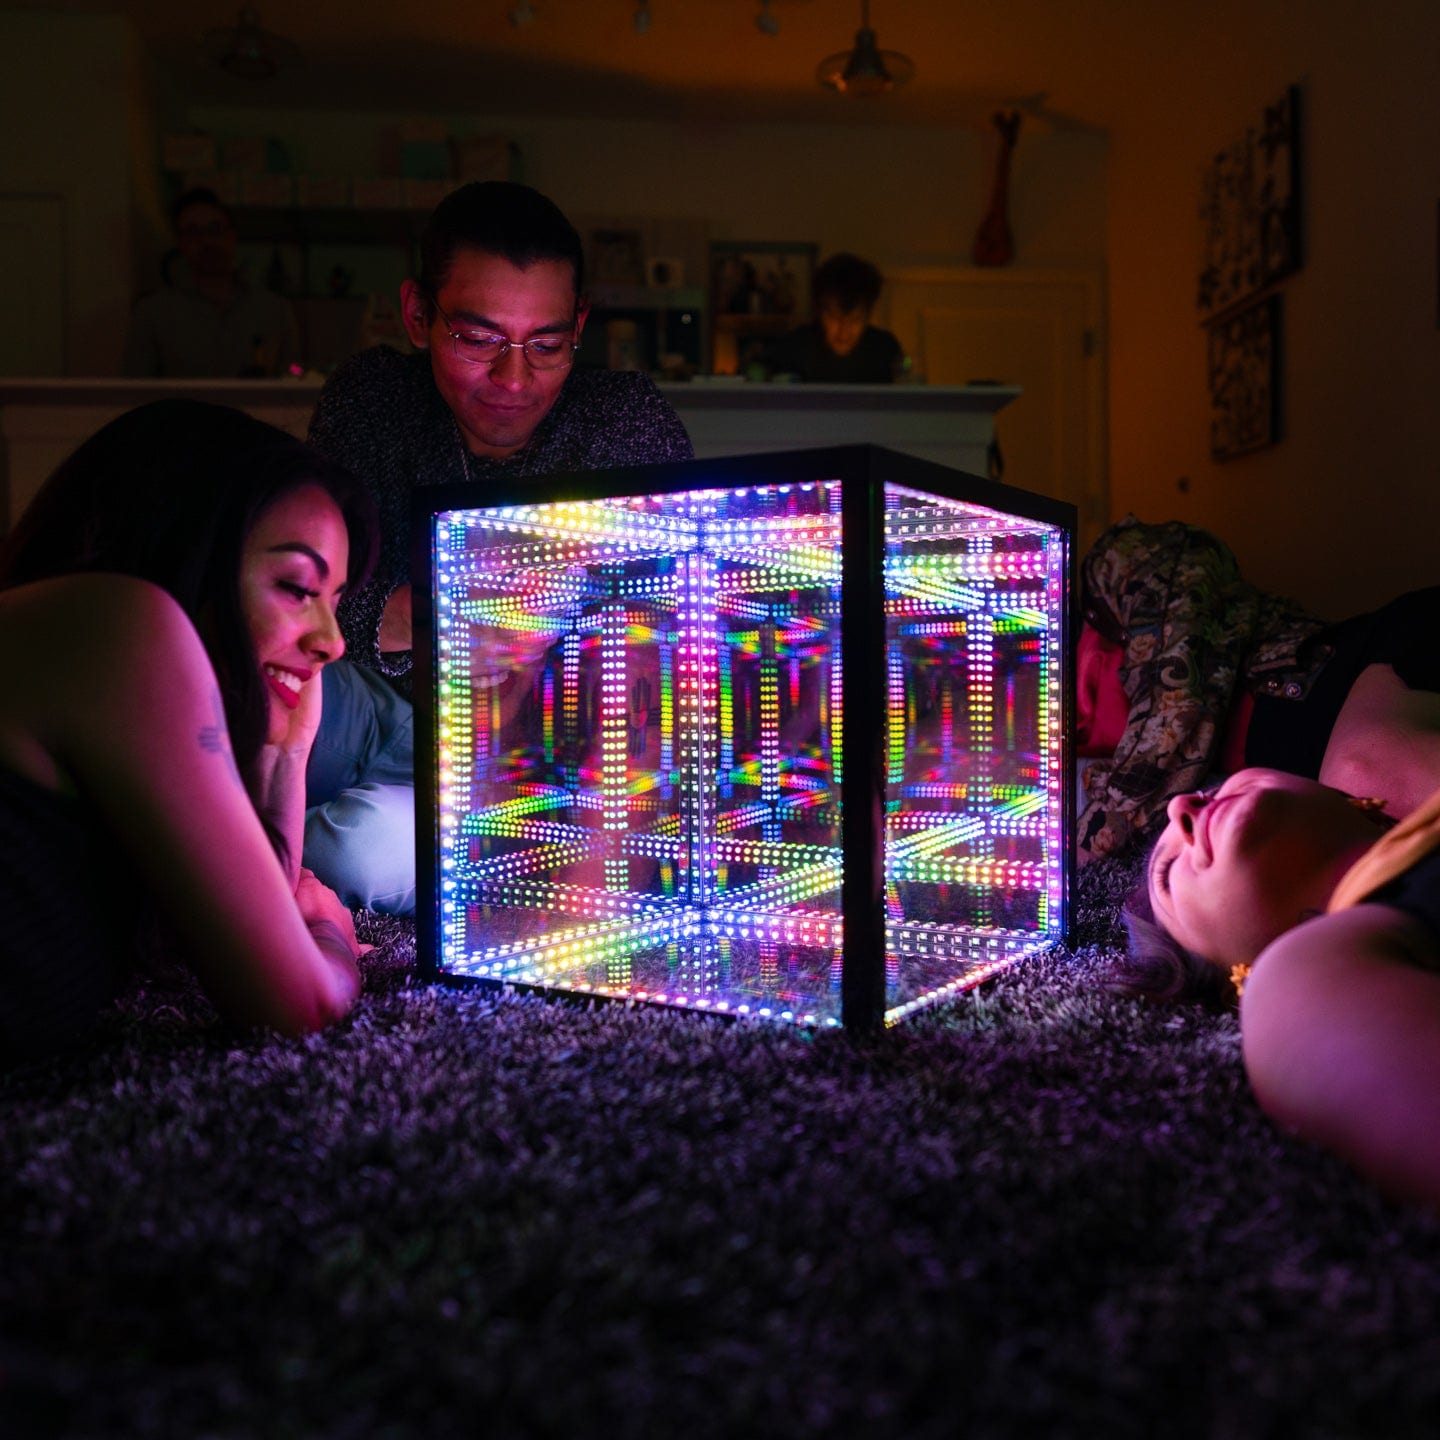 Friends looking at a HyperCube, part of host’s bedroom mood lighting ideas